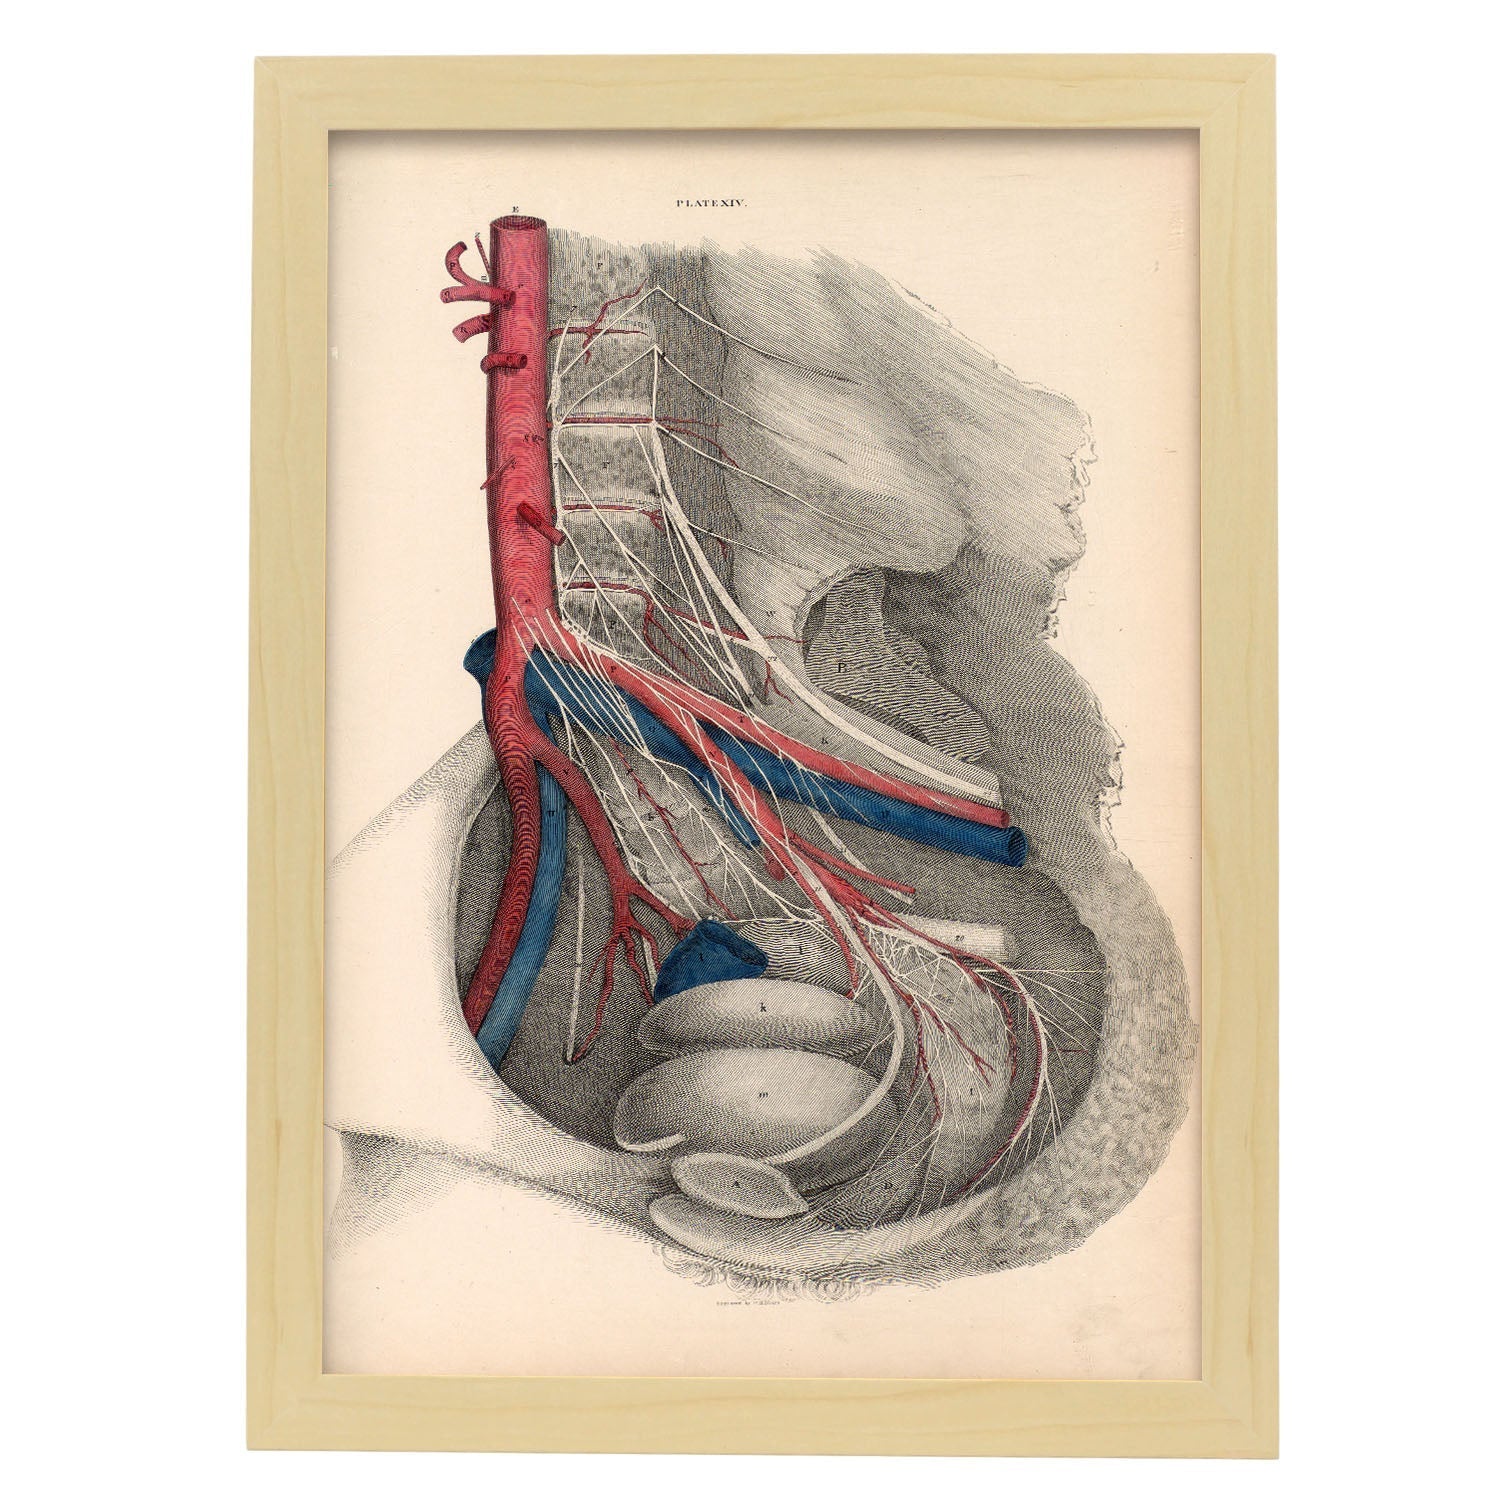 Dissection of the pelvis-Artwork-Nacnic-A3-Marco Madera clara-Nacnic Estudio SL